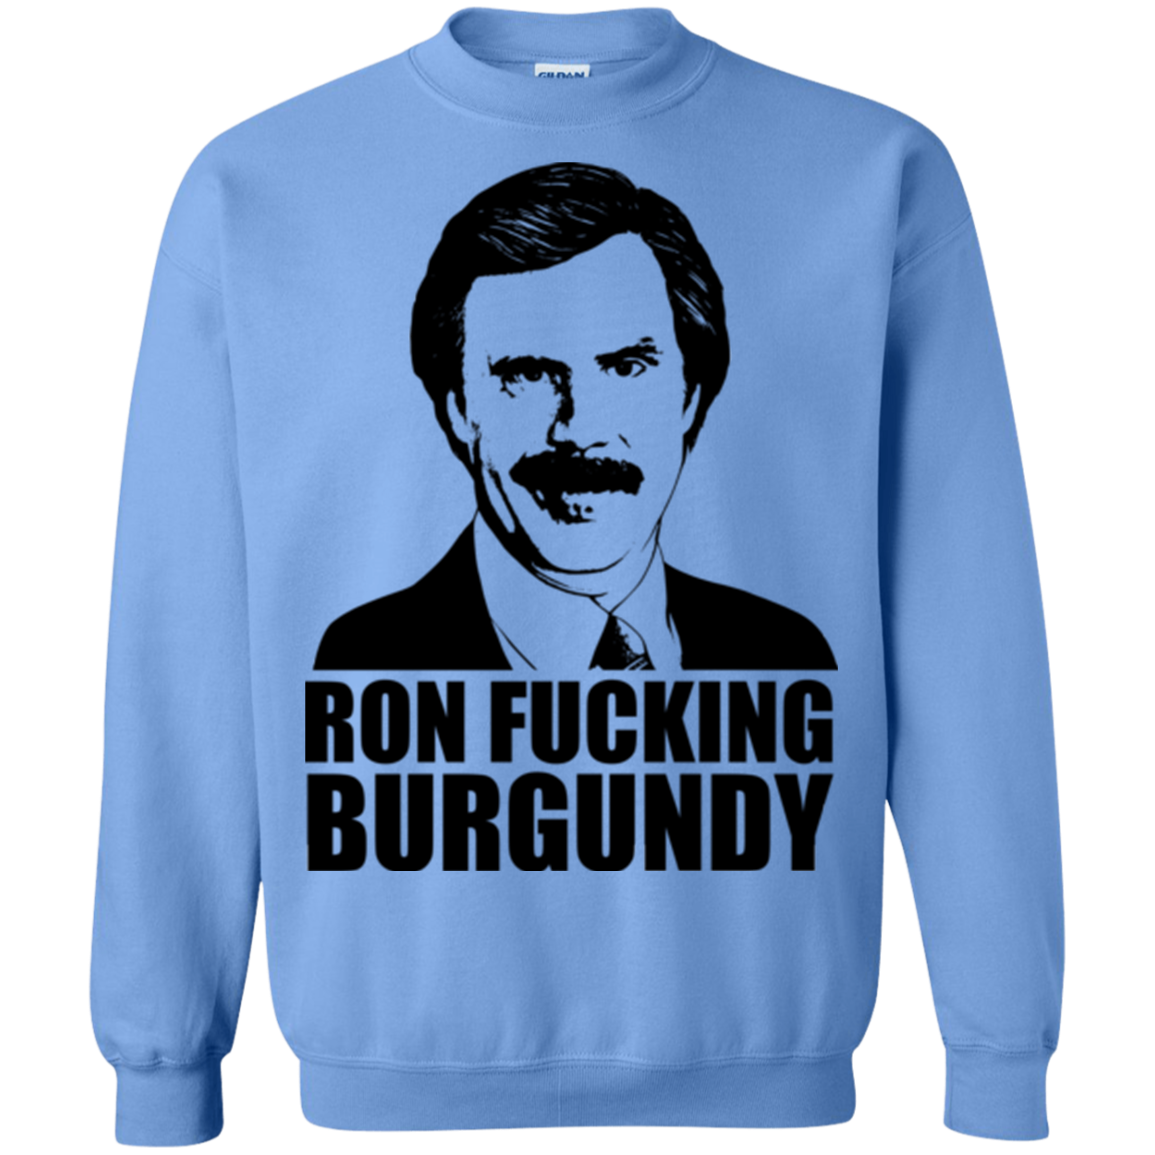 Ron Fucking Burgundy Crewneck Sweatshirt